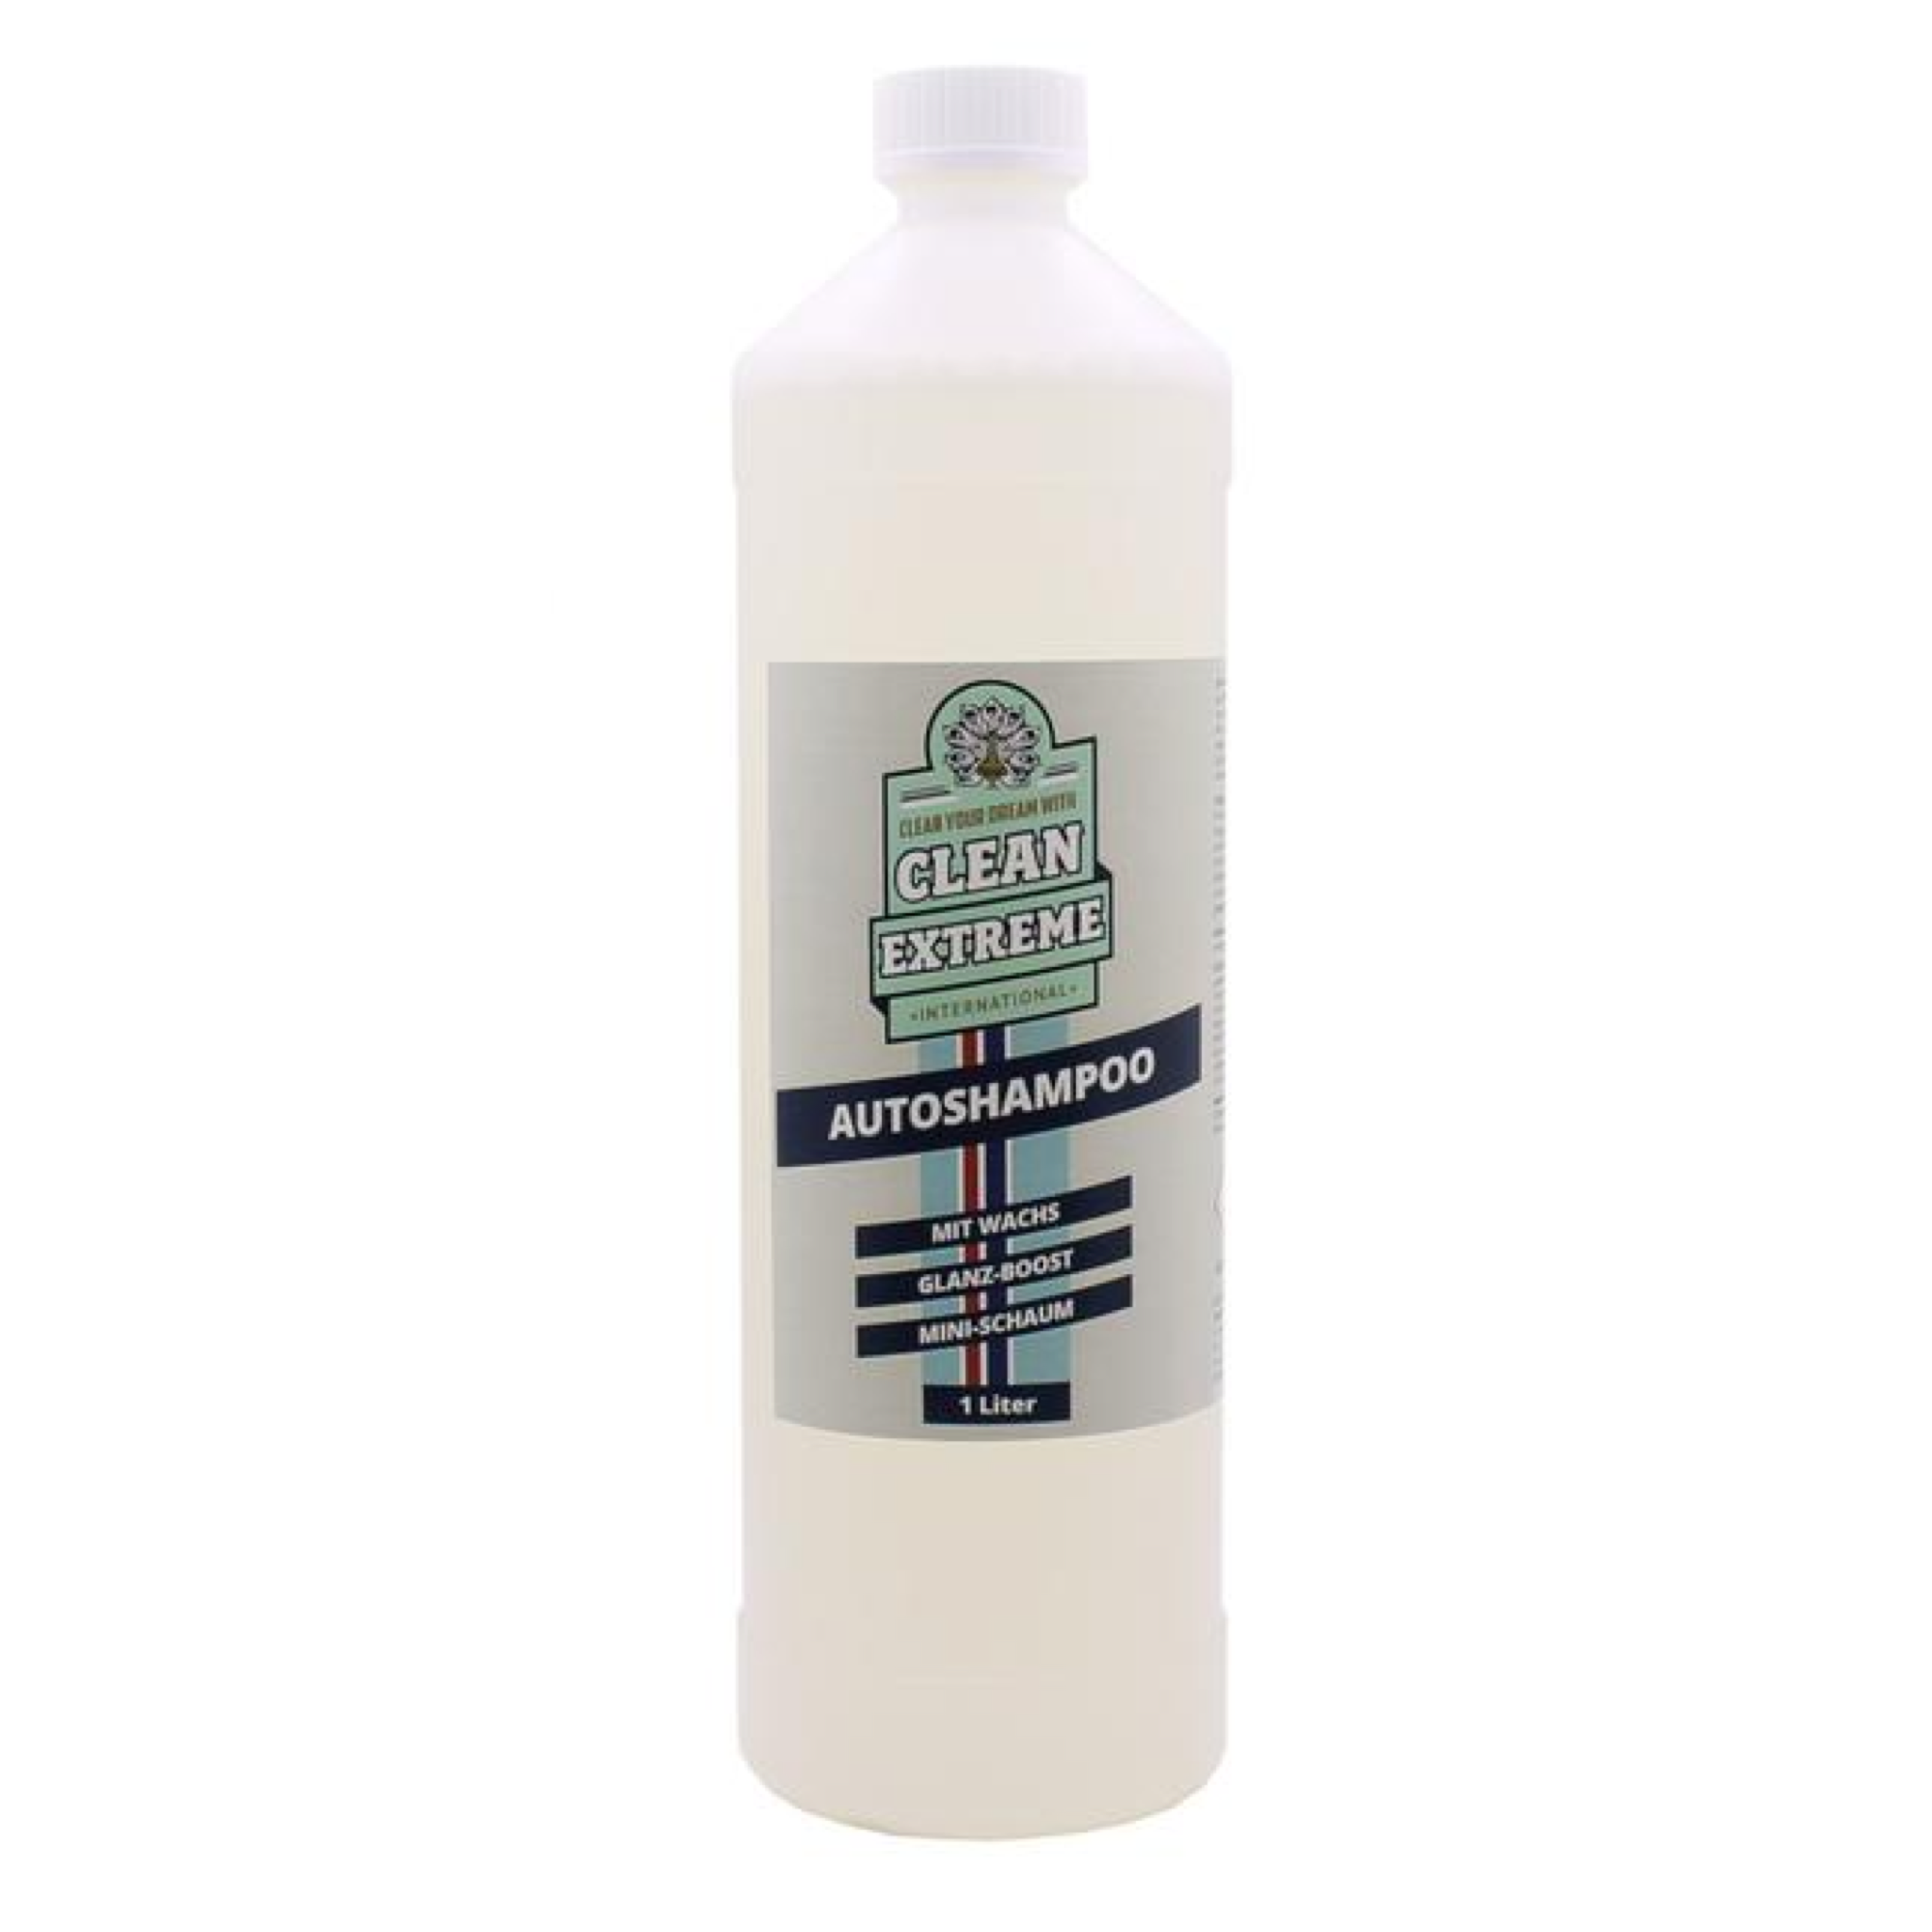 Mattlack Auto-Shampoo Folie & Lack - Konzentrat - 1 Liter